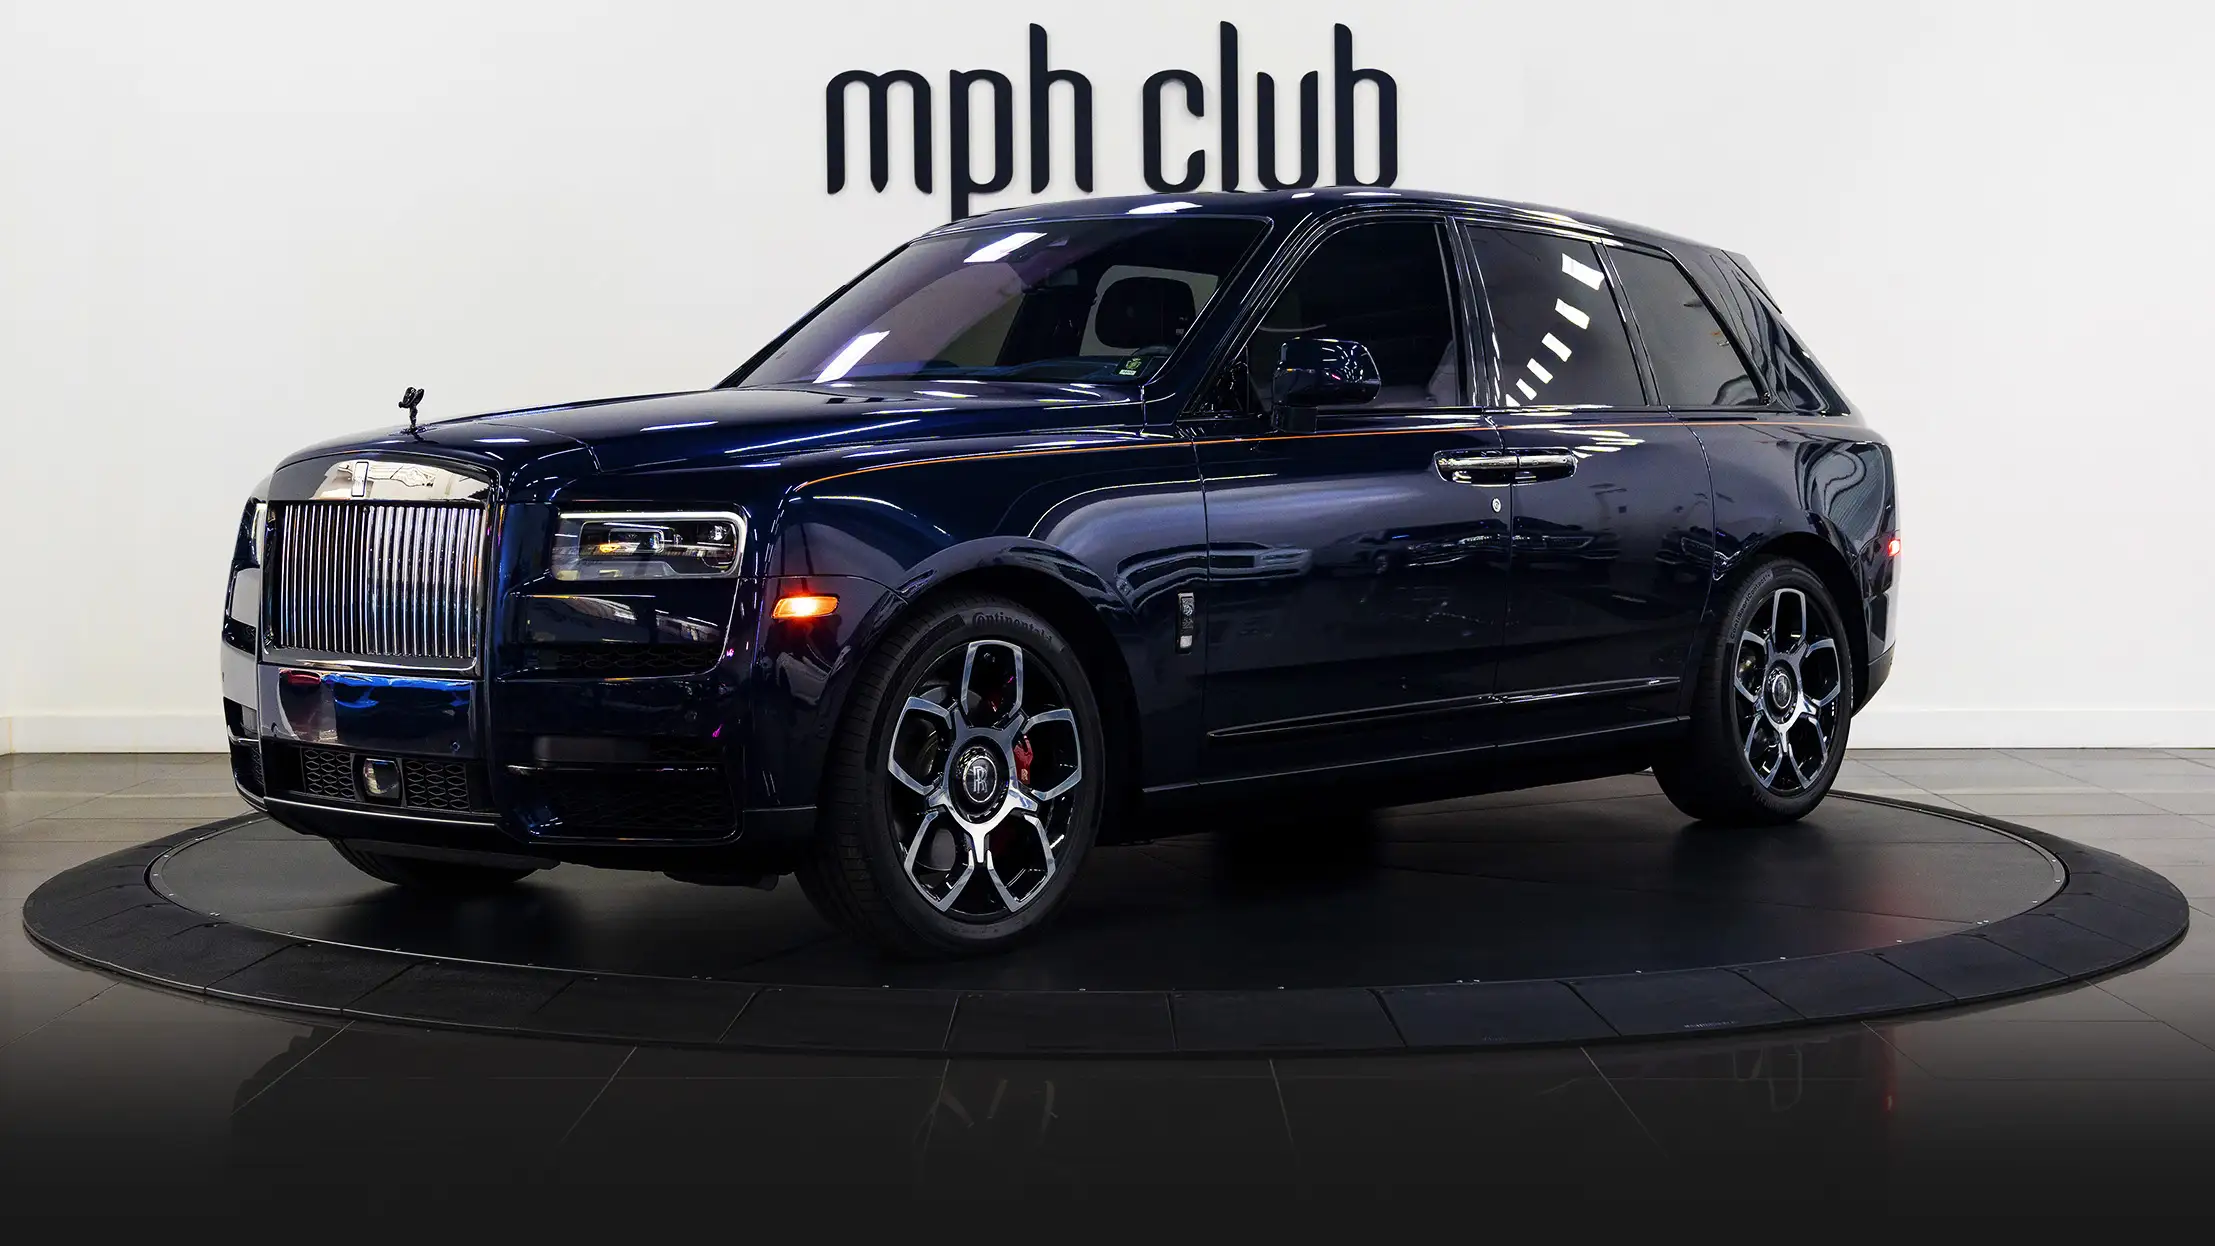 Blue Rolls Royce Cullinan Black Badge rental profile view mph club